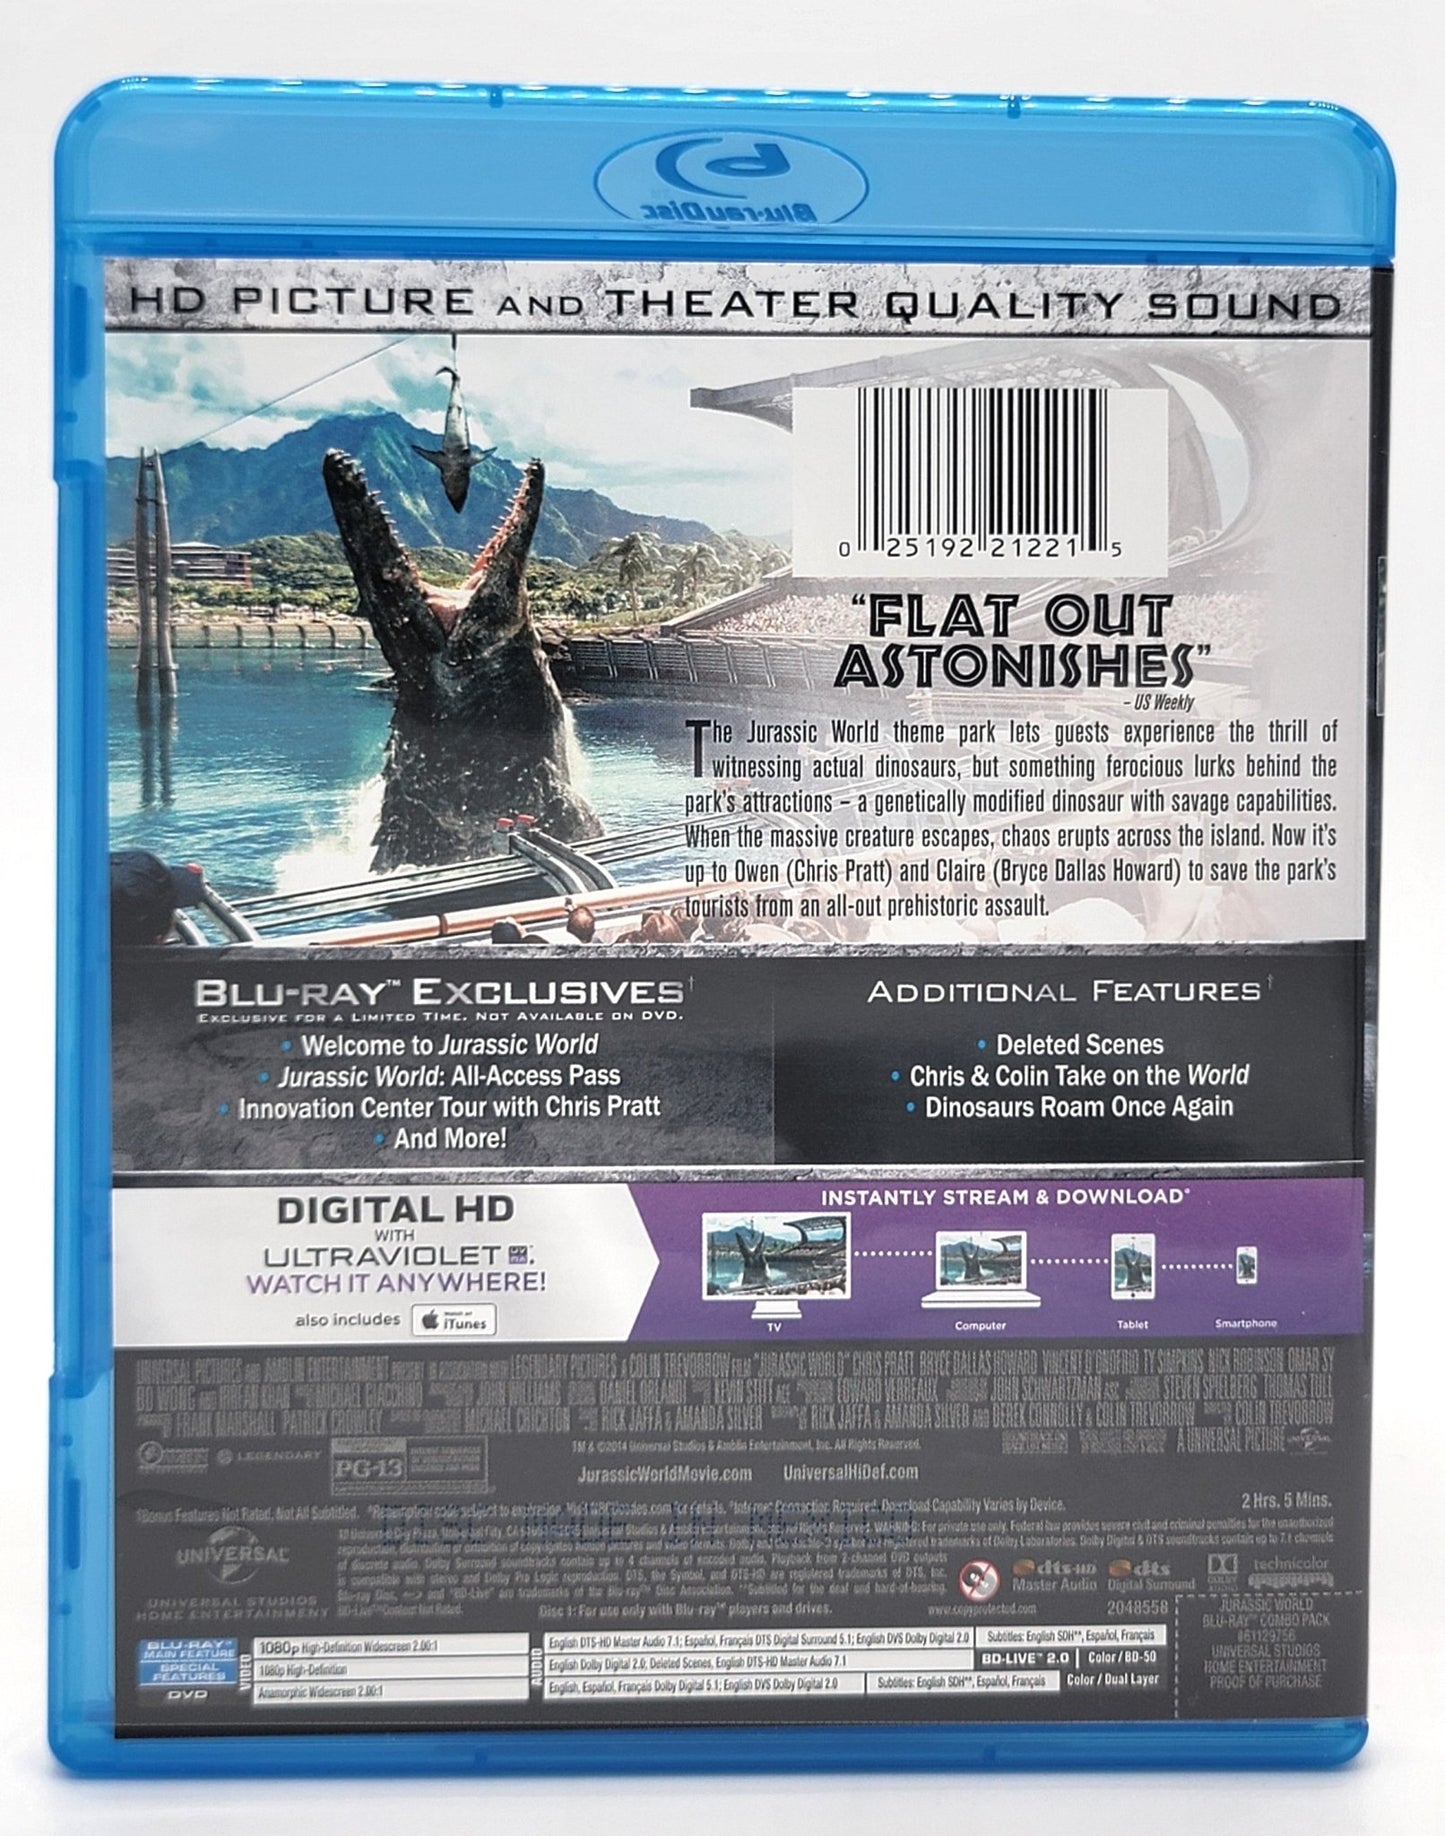 Universal Studios Home Entertainment - Jurassic World | DVD | Blu Ray - DVD - No Digital Copy - DVD & Blu-ray - Steady Bunny Shop